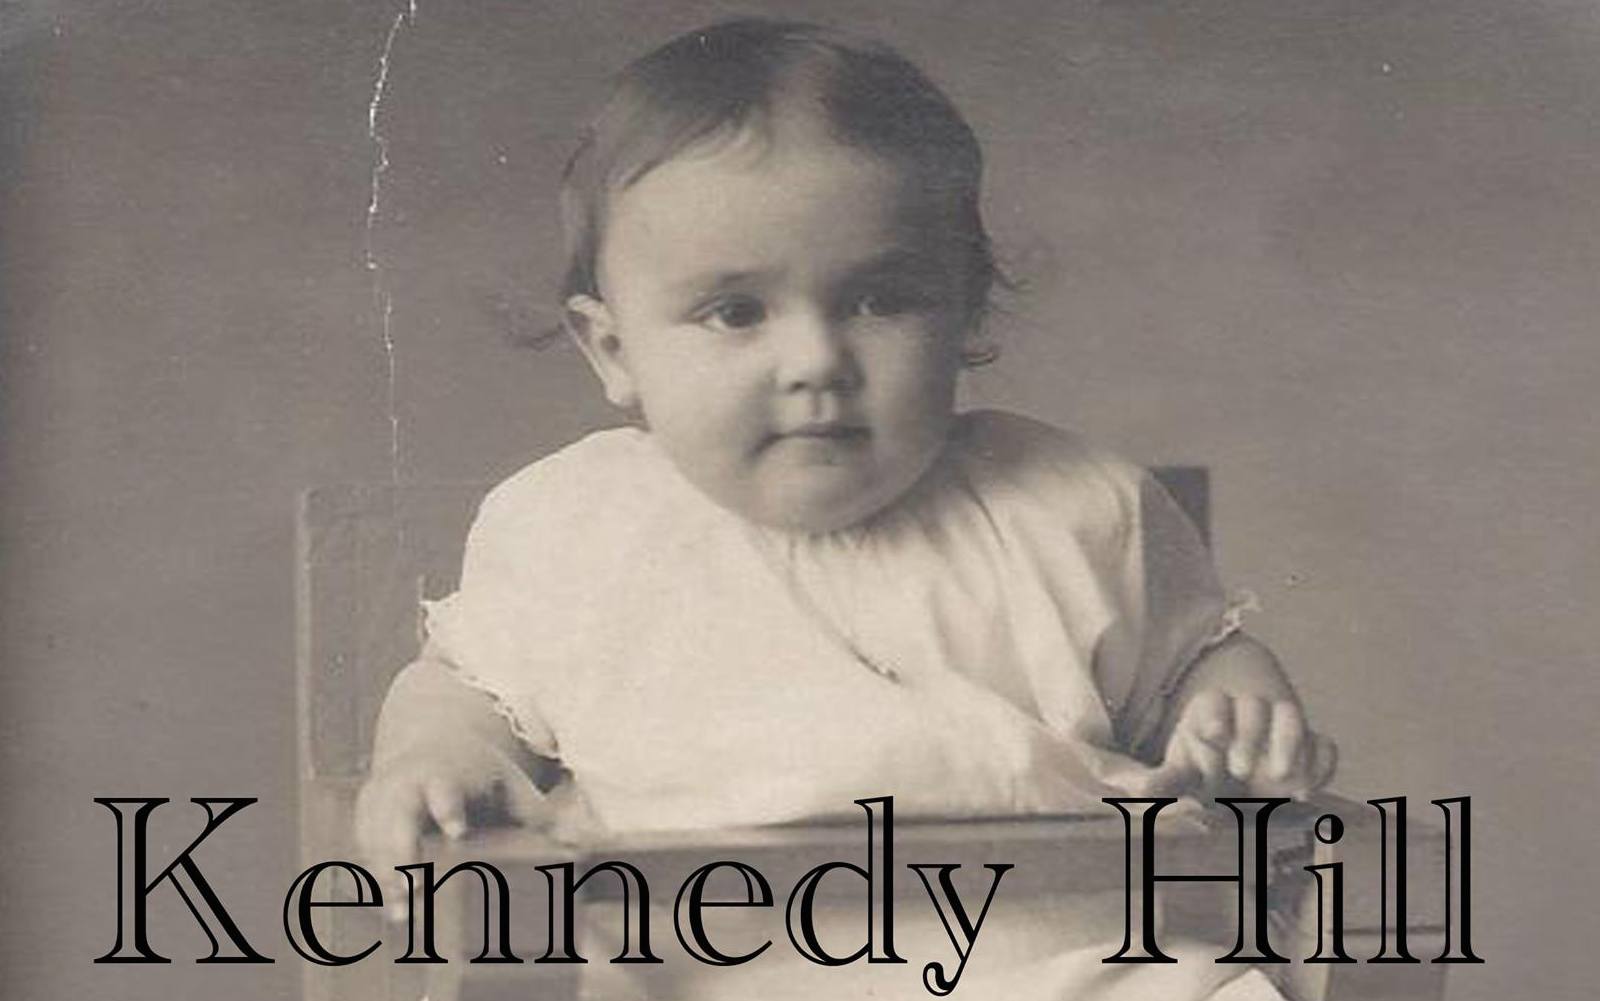 Kennedy Hill – A David Lynch MA in Film Master Thesis